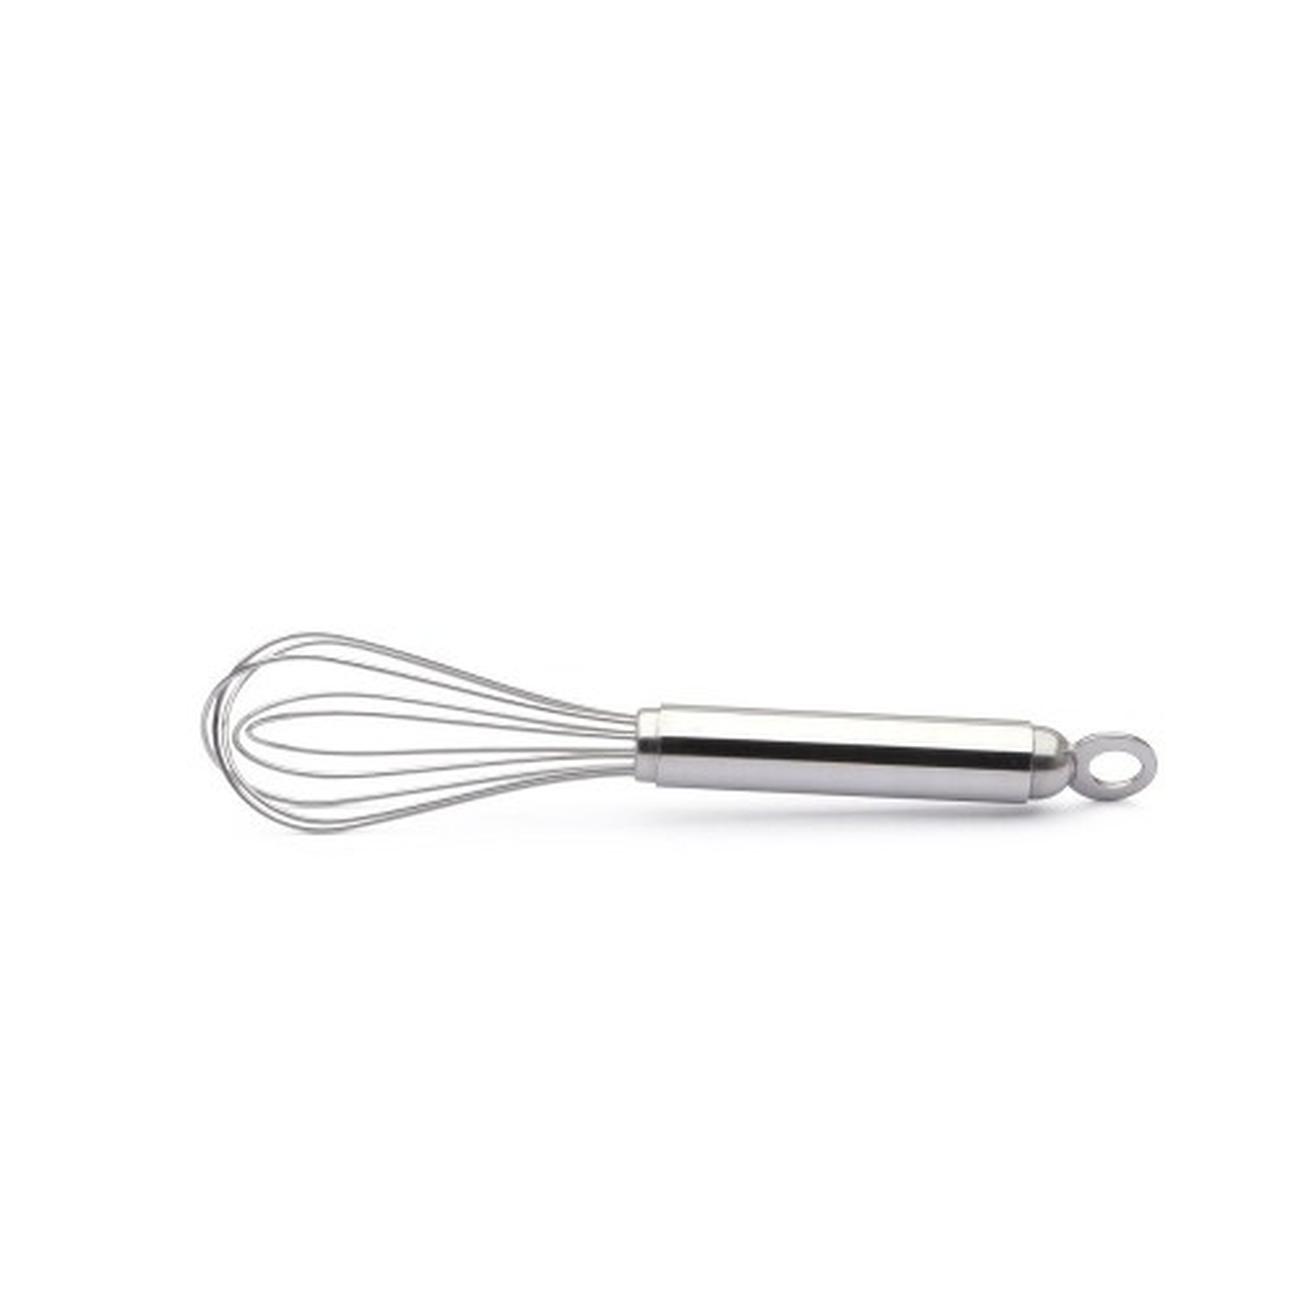 weis-mini-whisk-15cm-stainless-steel - Mini Series Kitchen Whisk 15cm